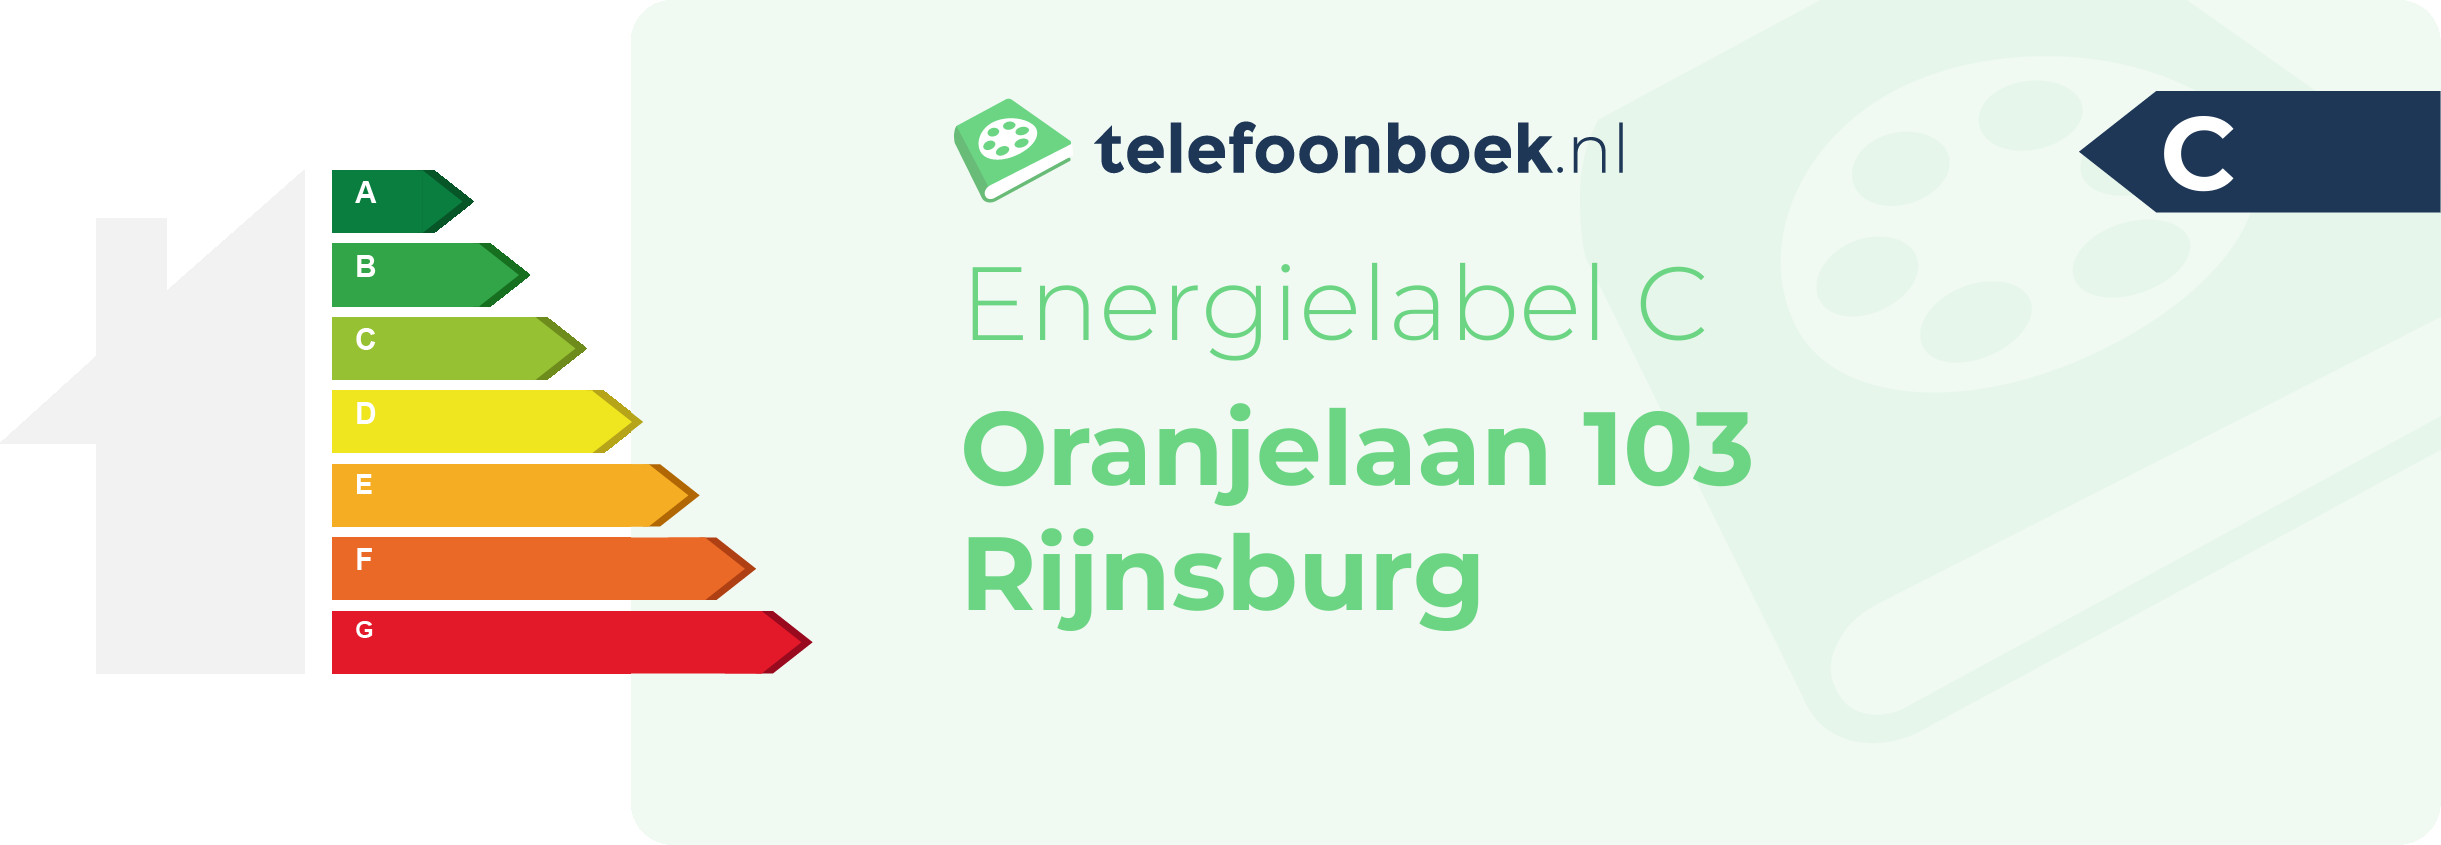 Energielabel Oranjelaan 103 Rijnsburg